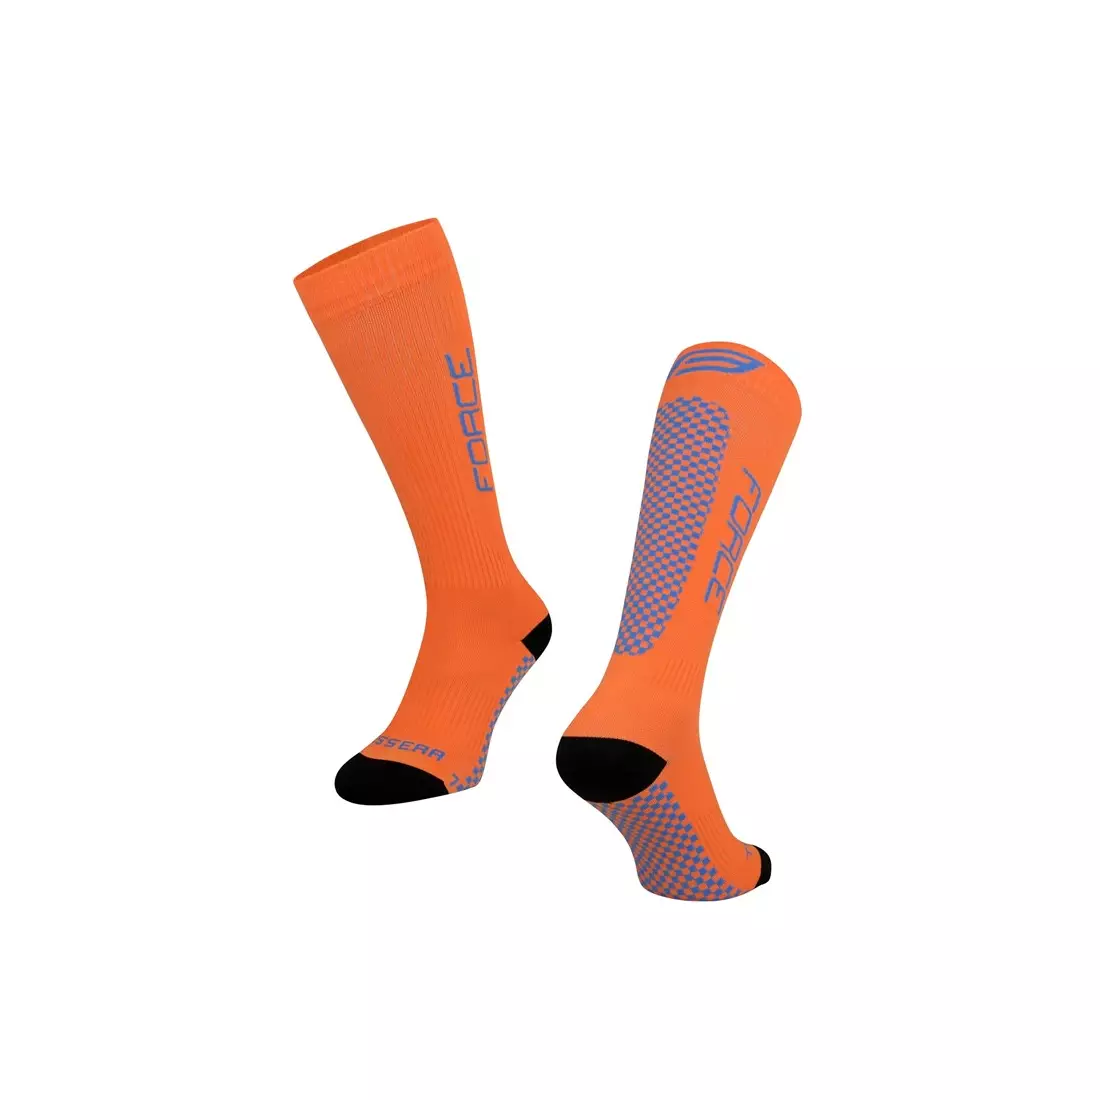 FORCE TESSERA COMPRESSION compression socks, orange